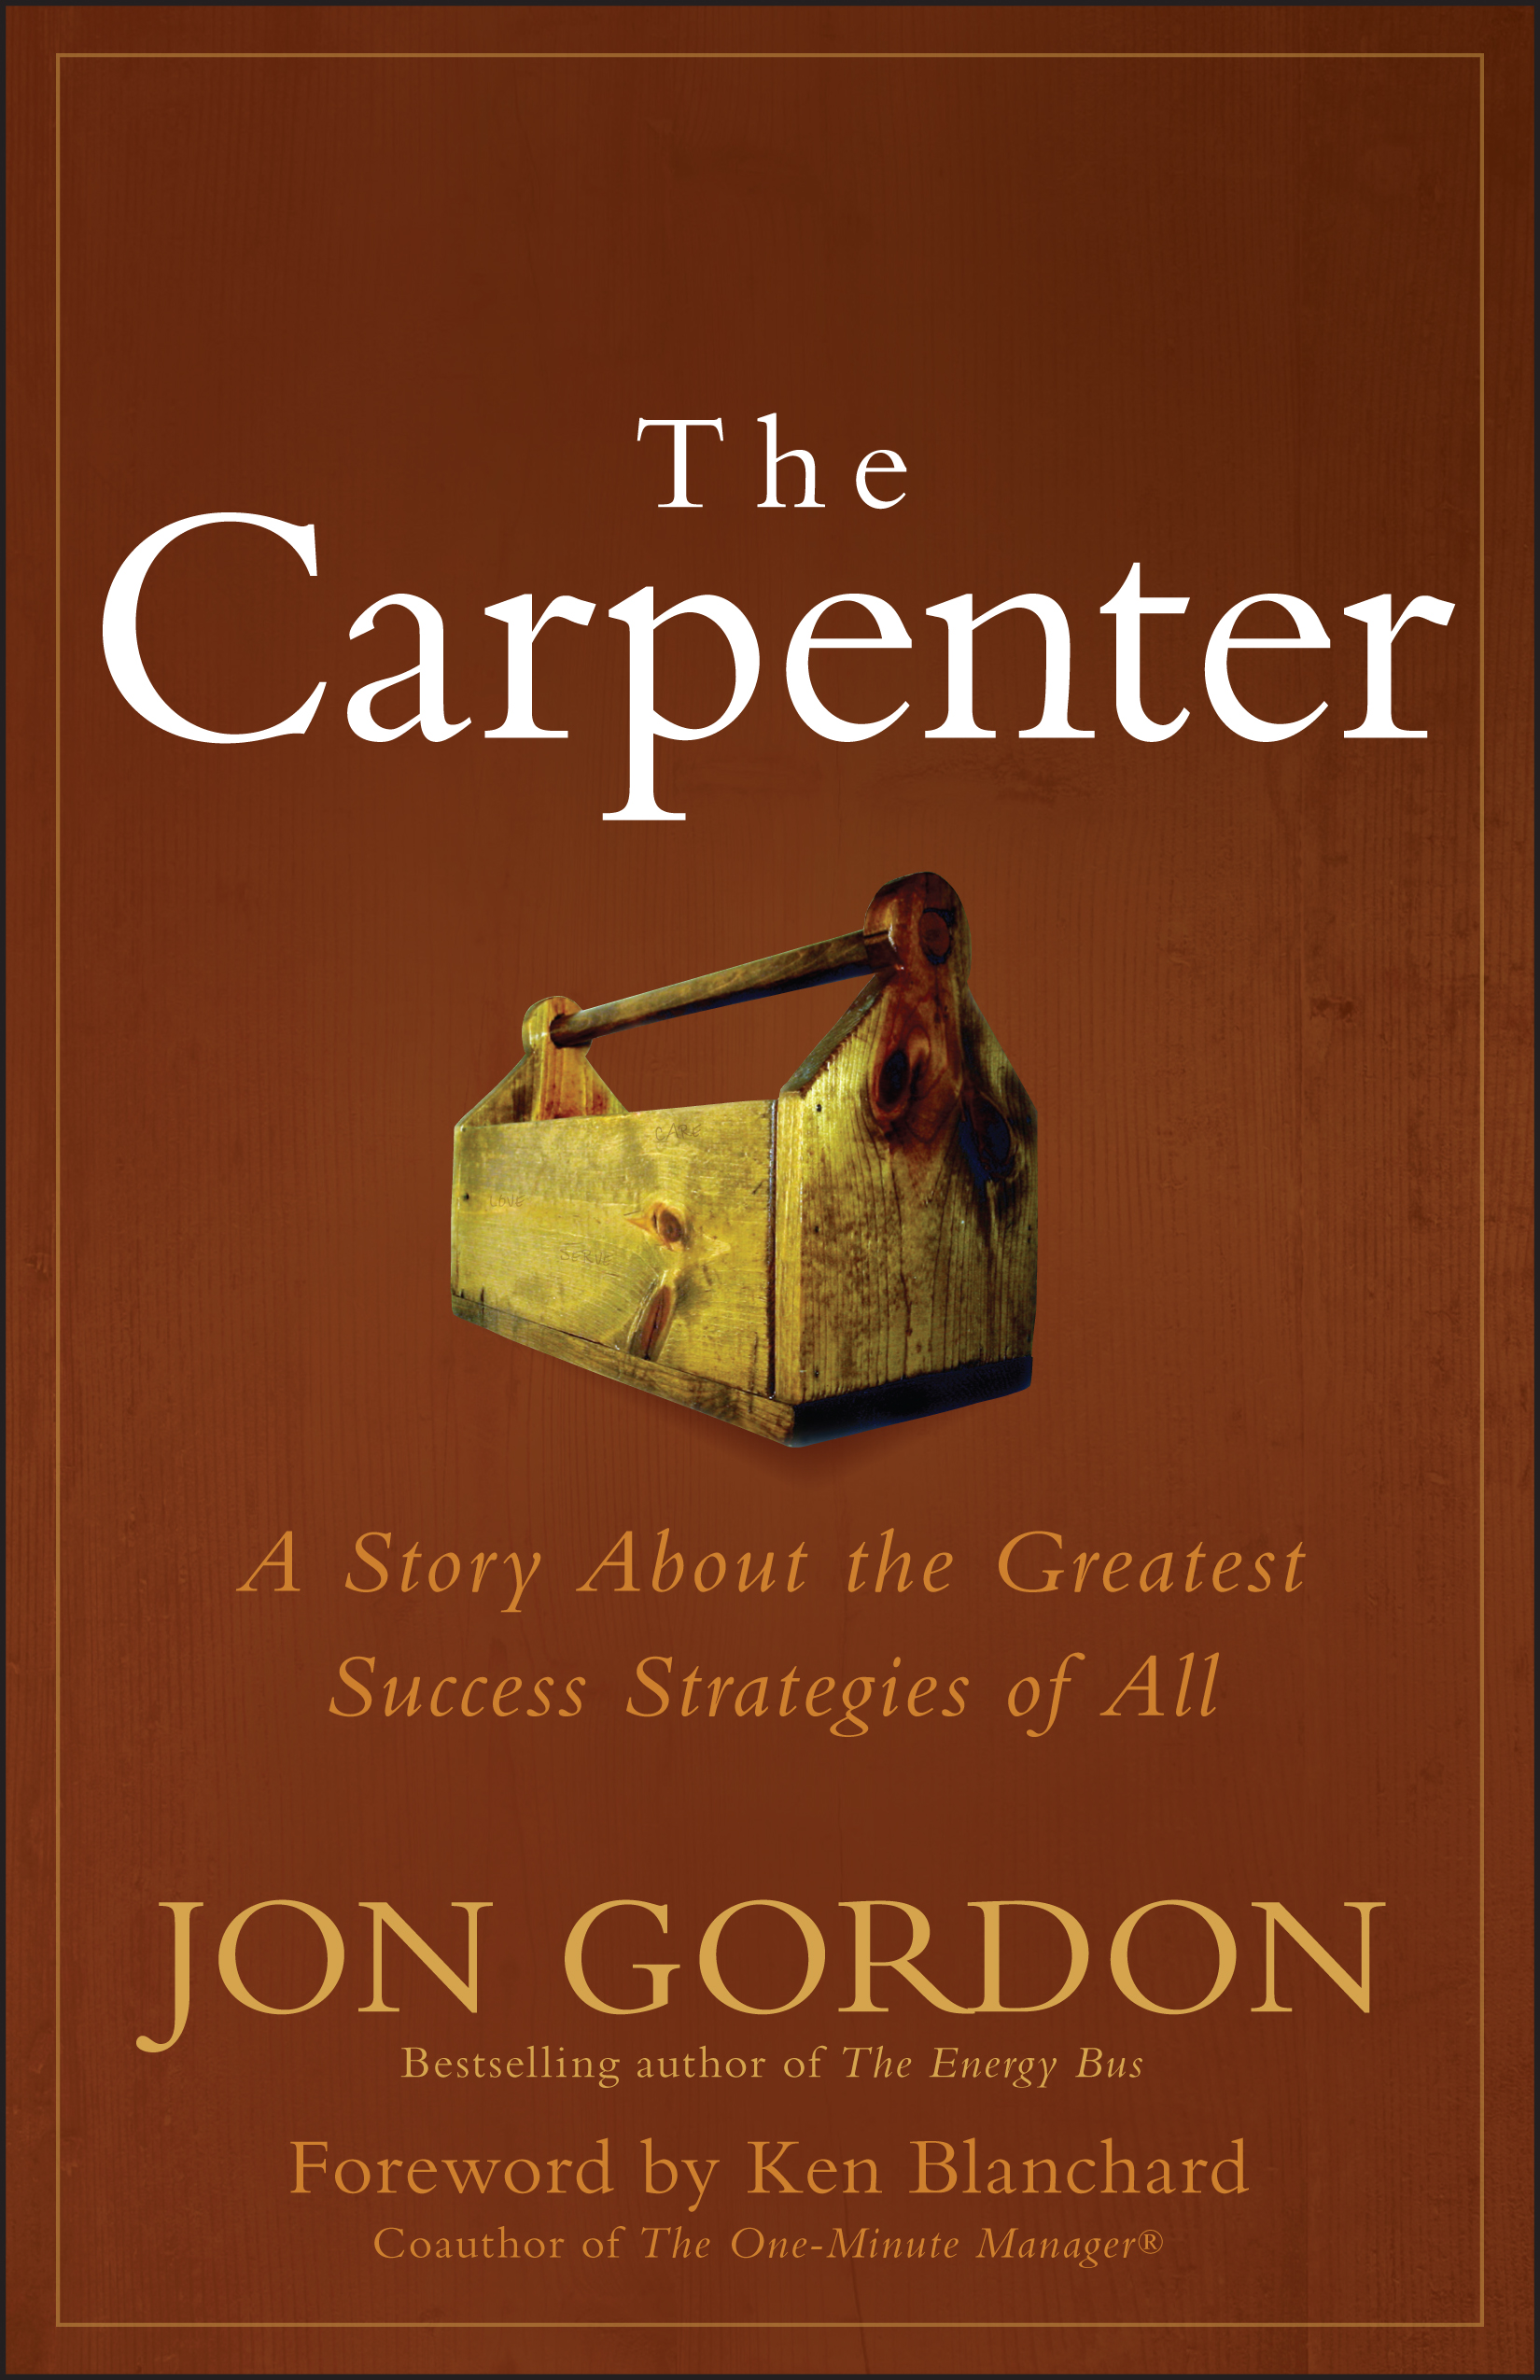 The Carpenter by Jon Gordon